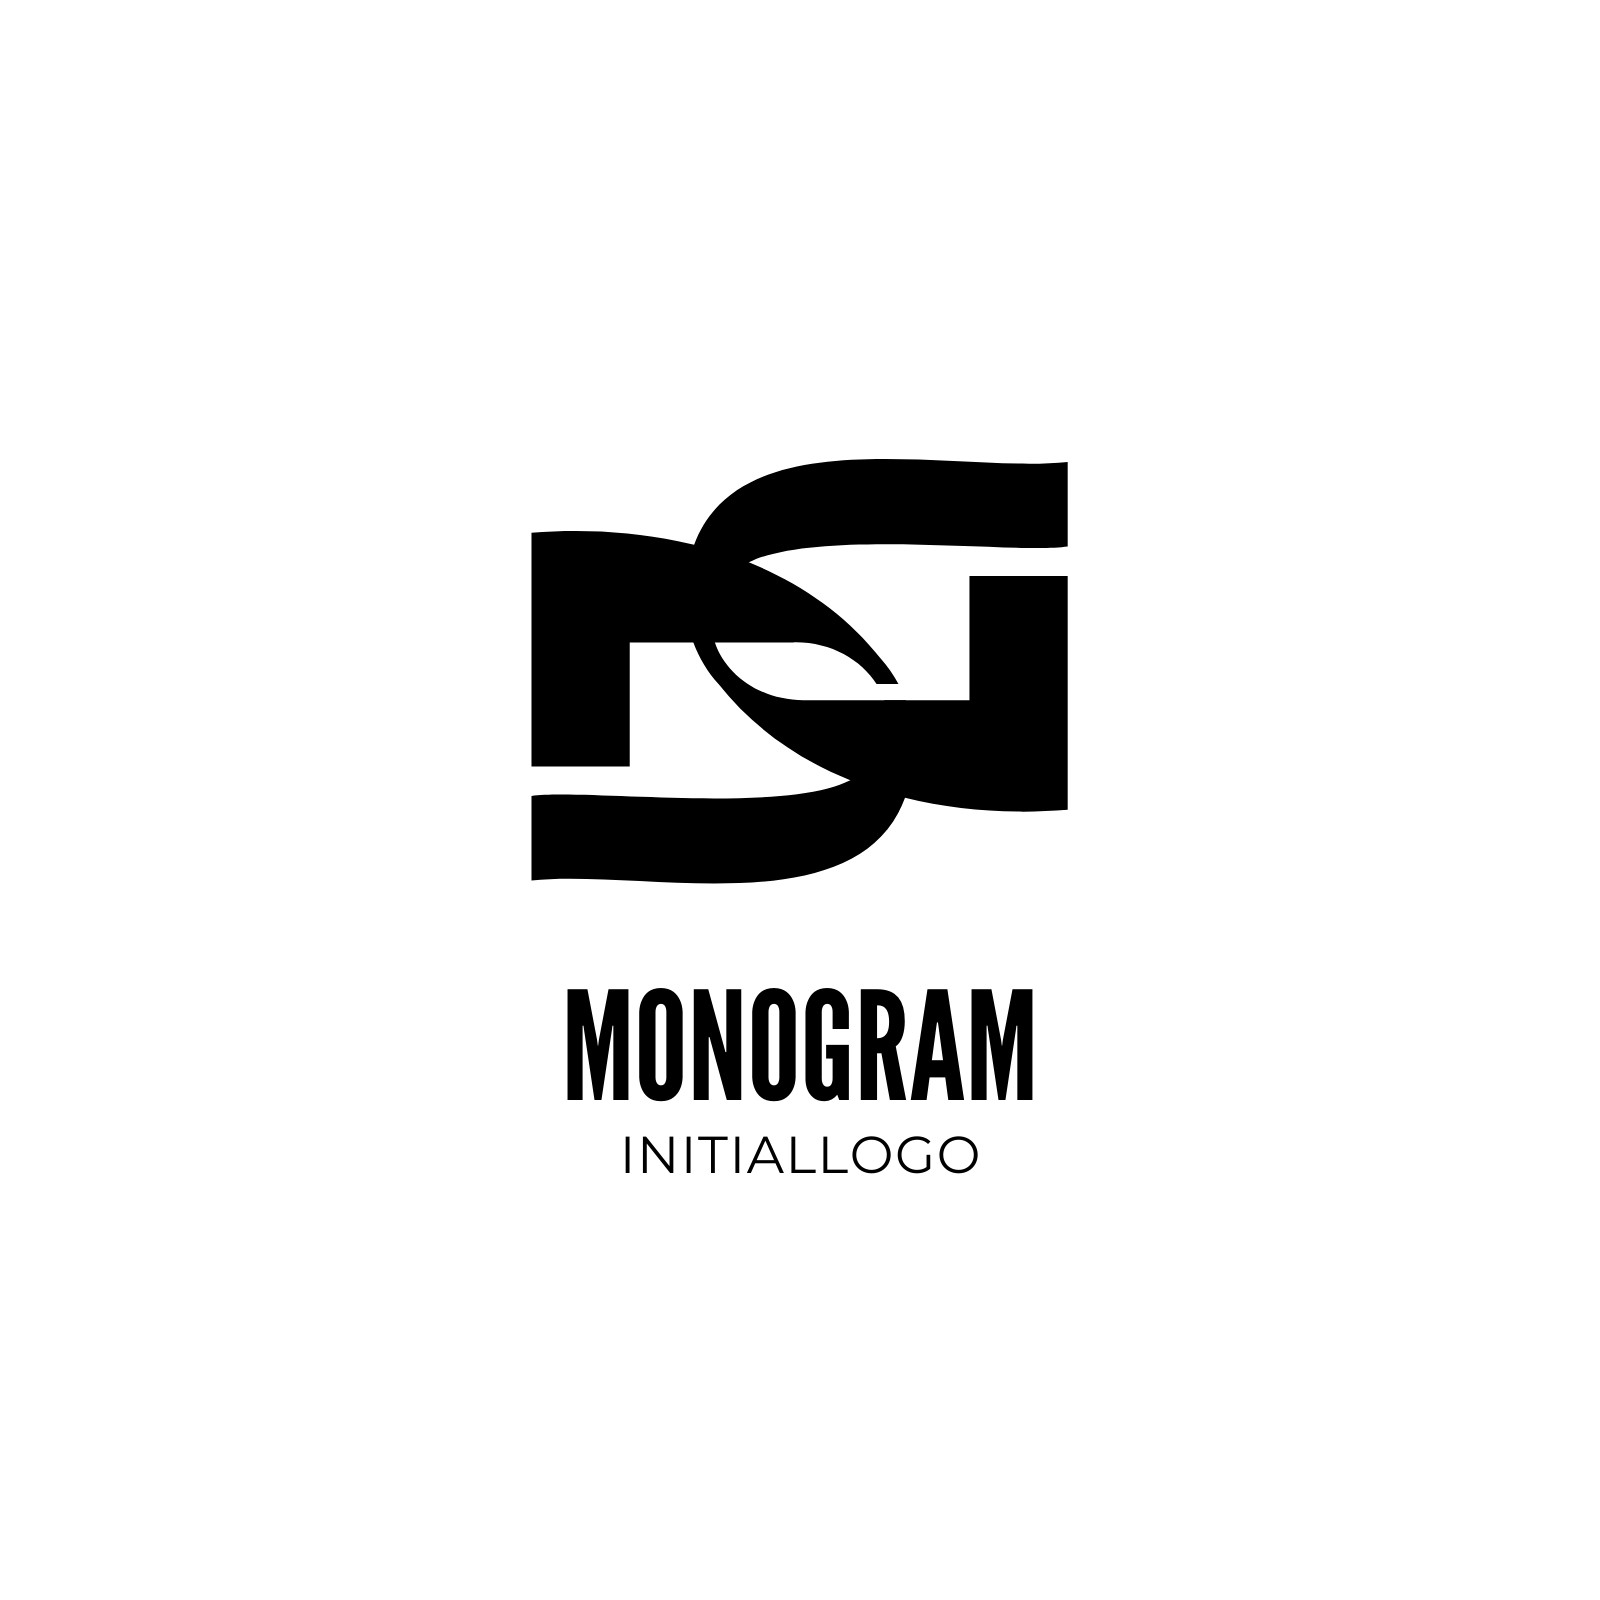 Free: Monogram mg logo design inspiration vector image 